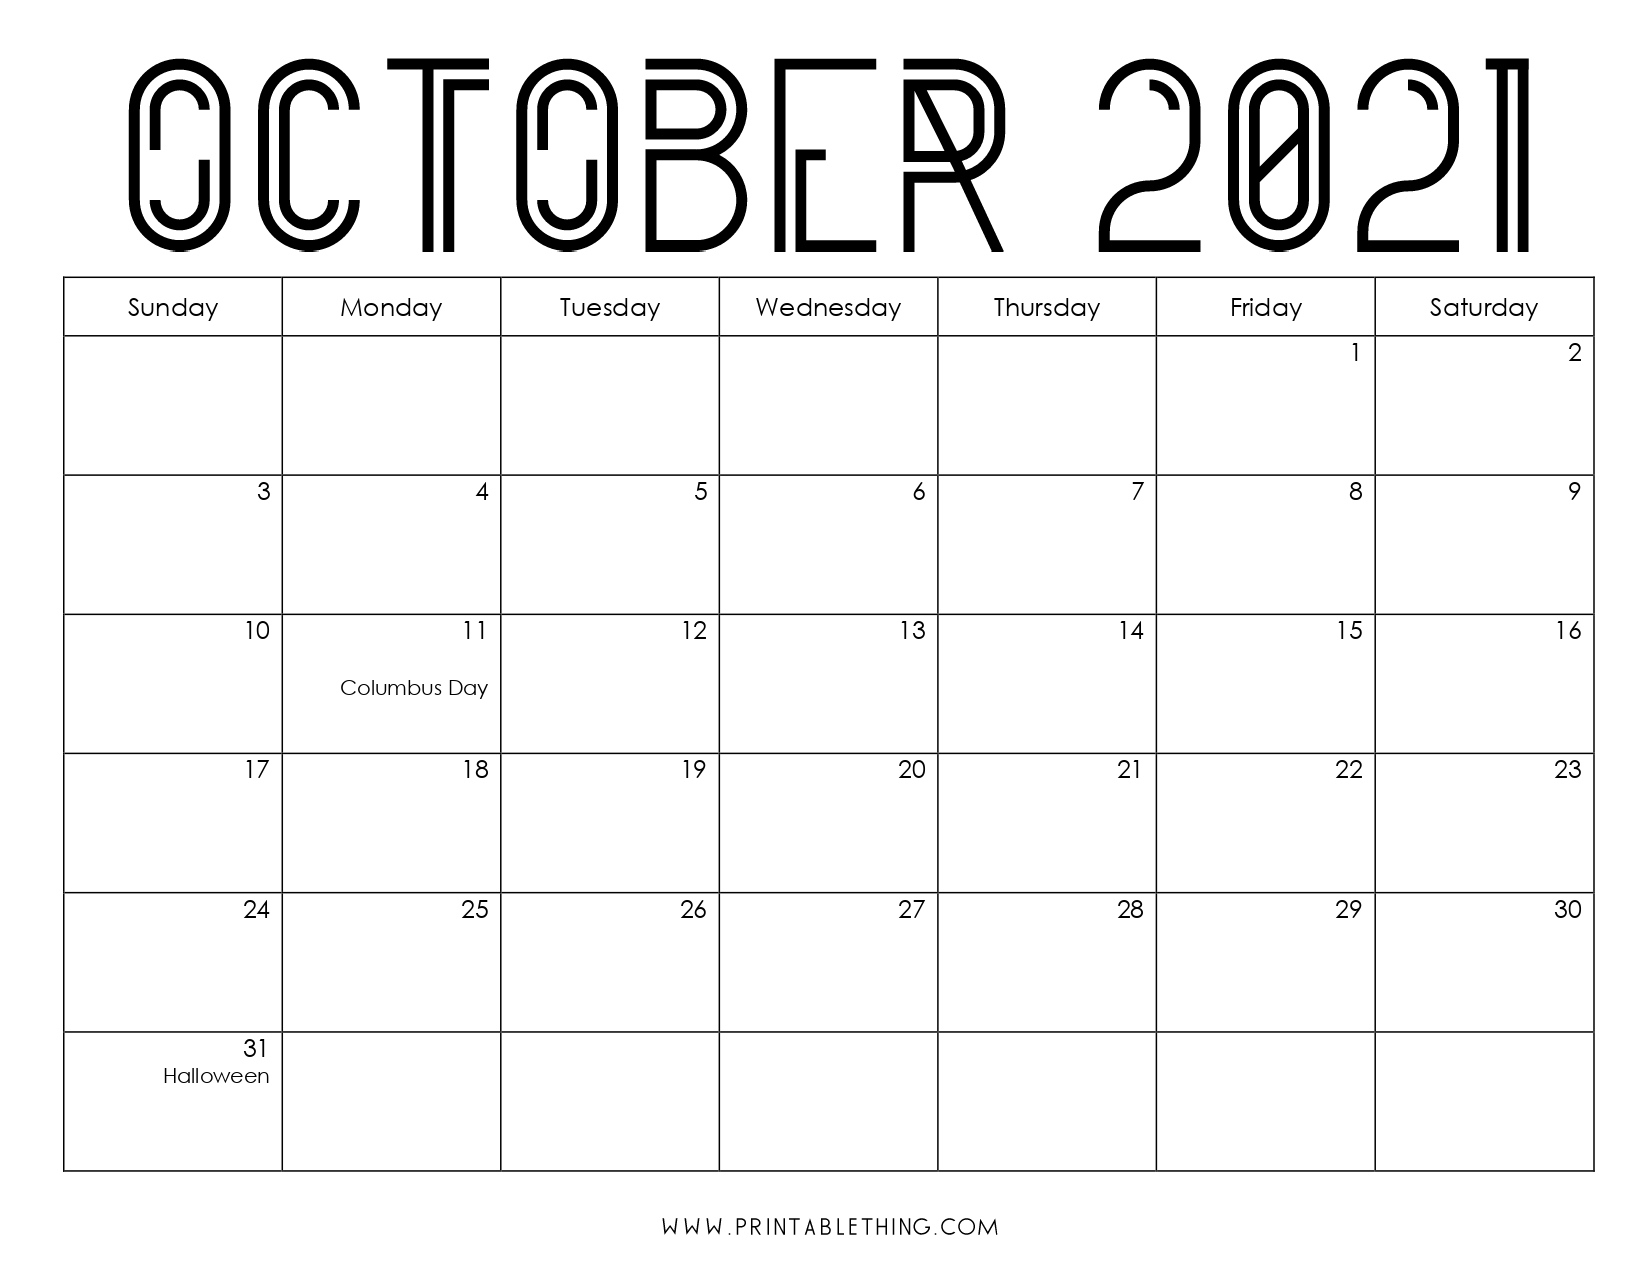 October 2021 Calendar Pdf, October 2021 Calendar Image Free October 2021 Calendar With Holidays Canada